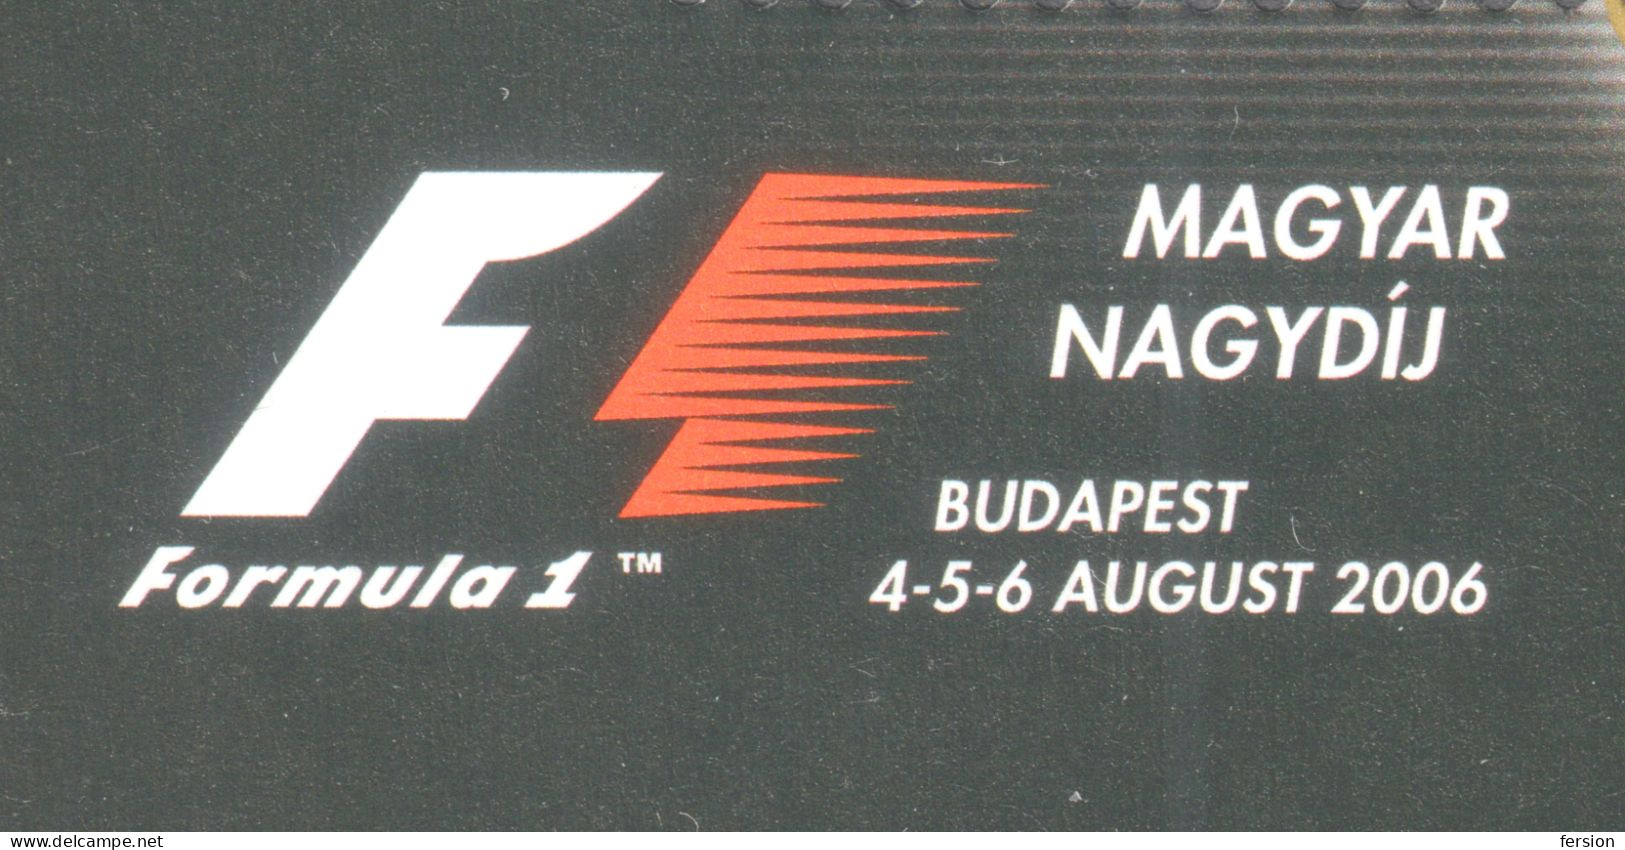 2006 Hungary Grand Prix 20th Anniv Formula 1 F1 HUNGARORING Bernie Ecclestone FERRARI Philatelist Memorial Sheet - Cars